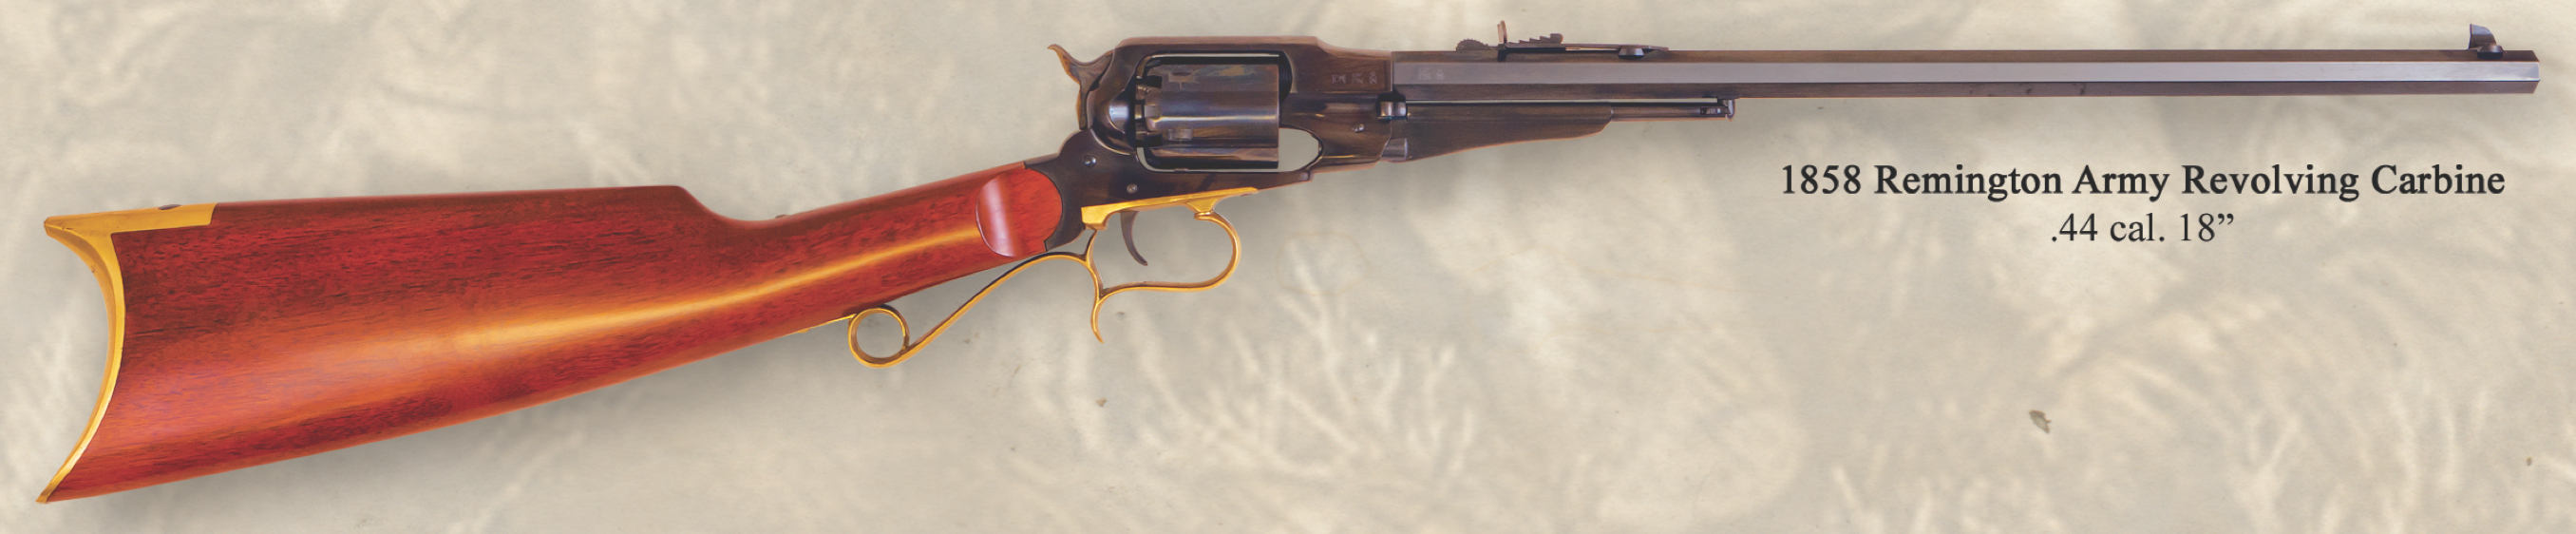 1858 Remington Army Revolving Carbine